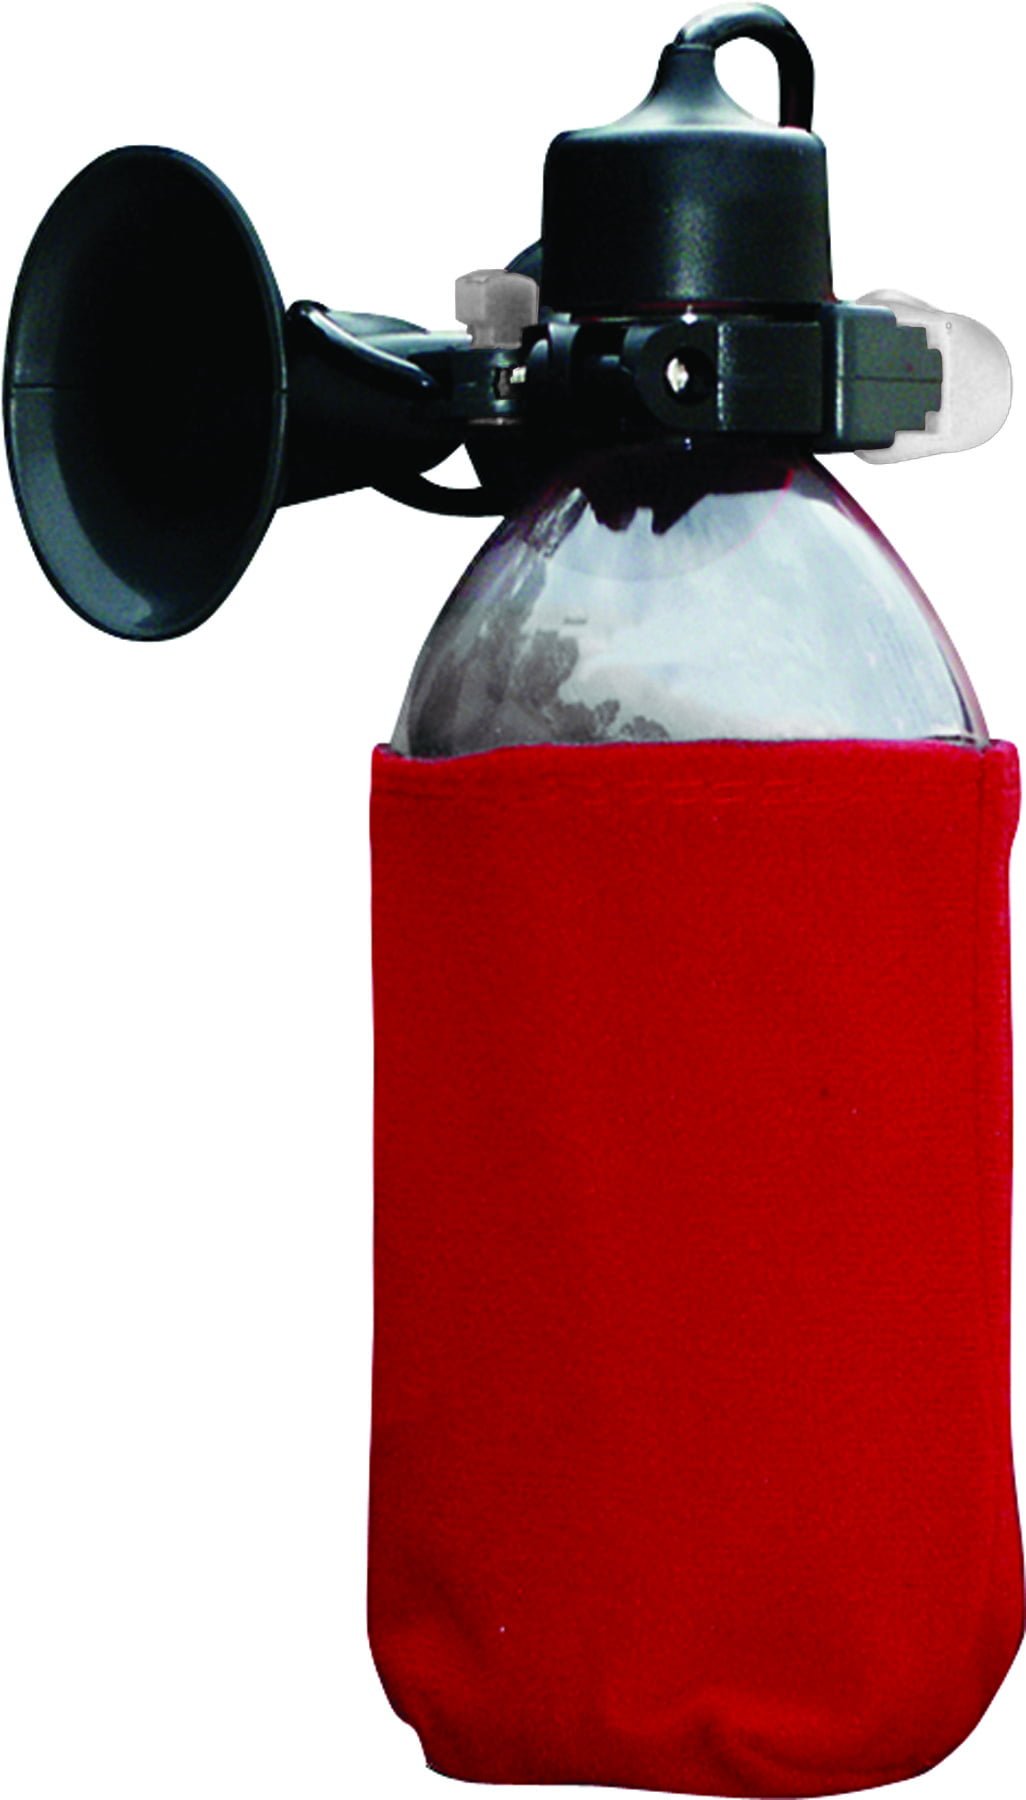 3x Mini AIRHORNS Pump Small Air Horn Reusable Portable Hand Held Loud Sports 9" for sale online 